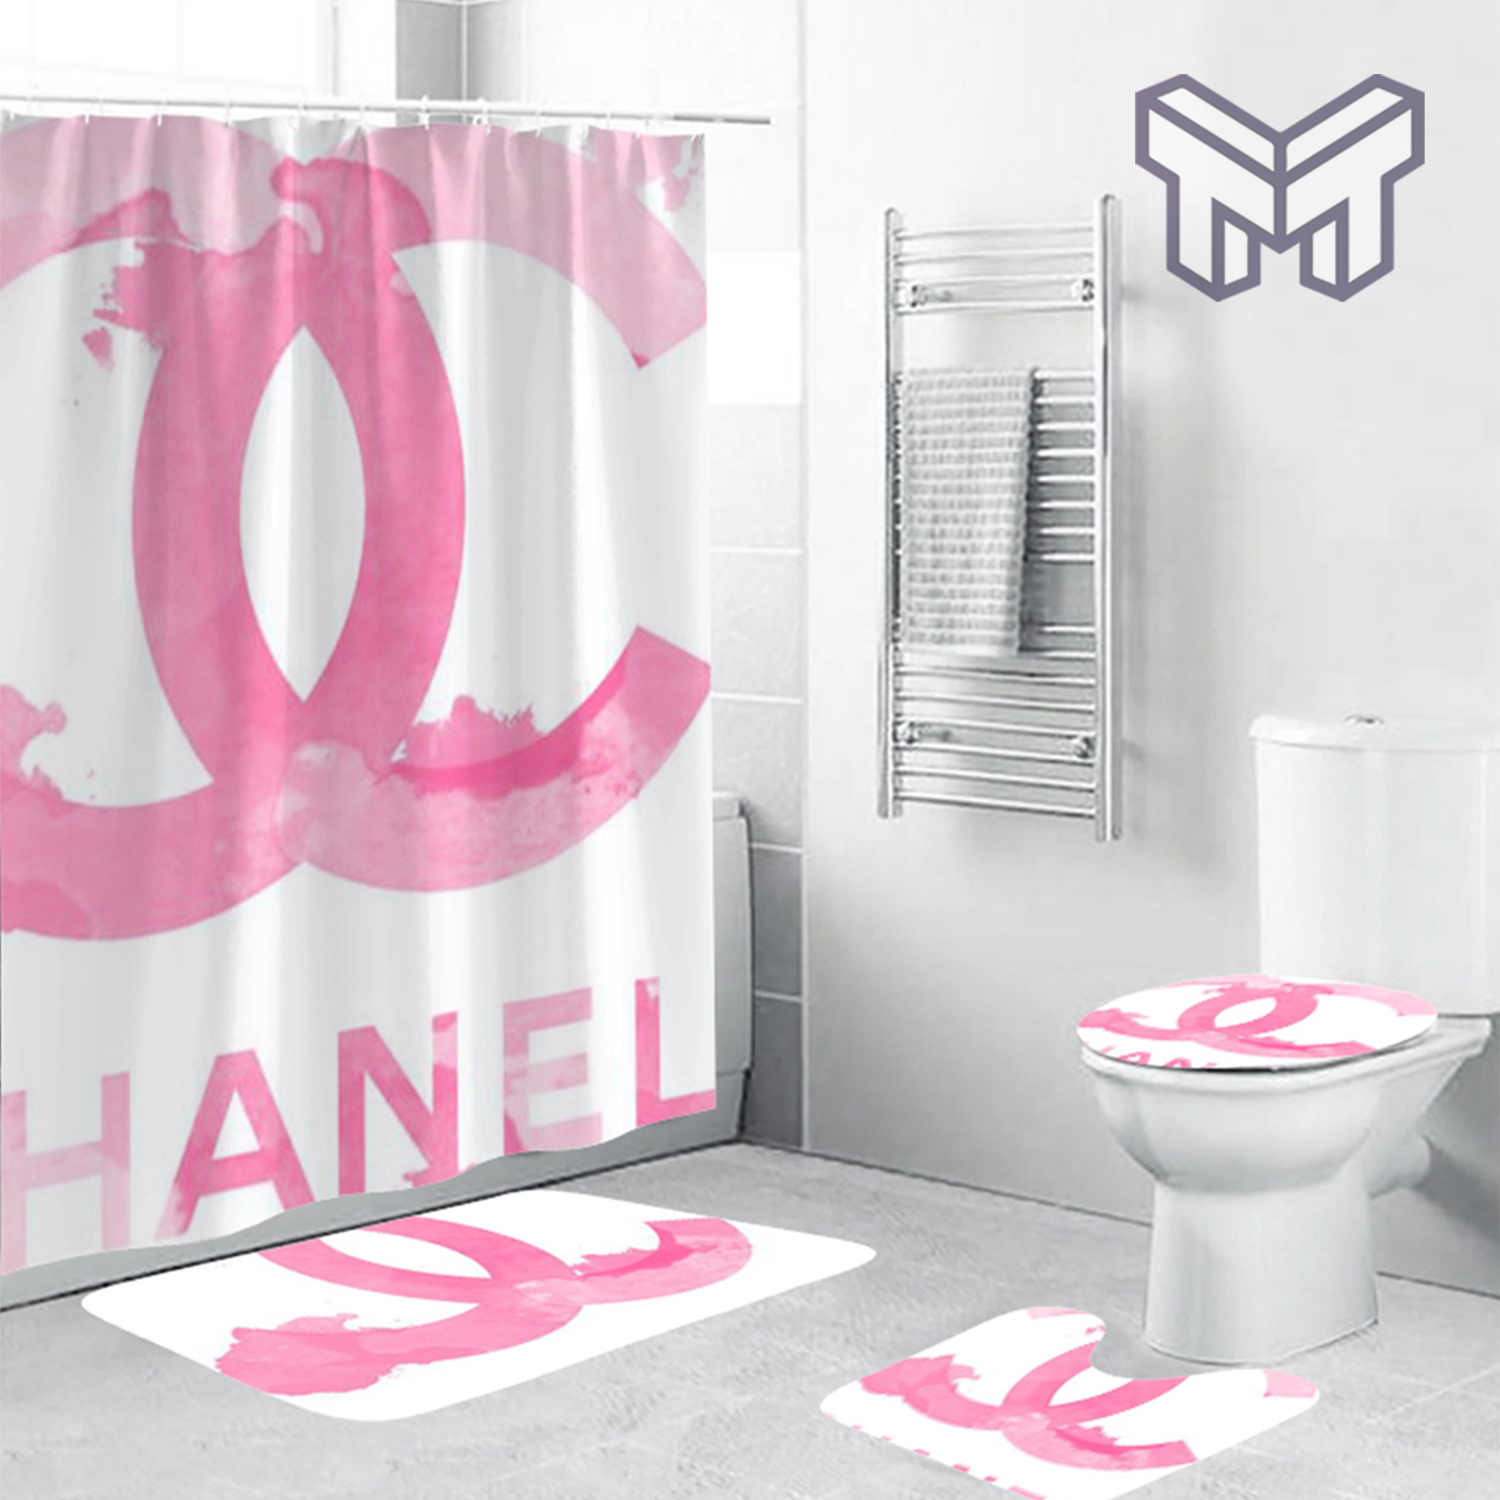 Chanel Pinky Logo Fashion Luxury Brand Bathroom Set Home Decor